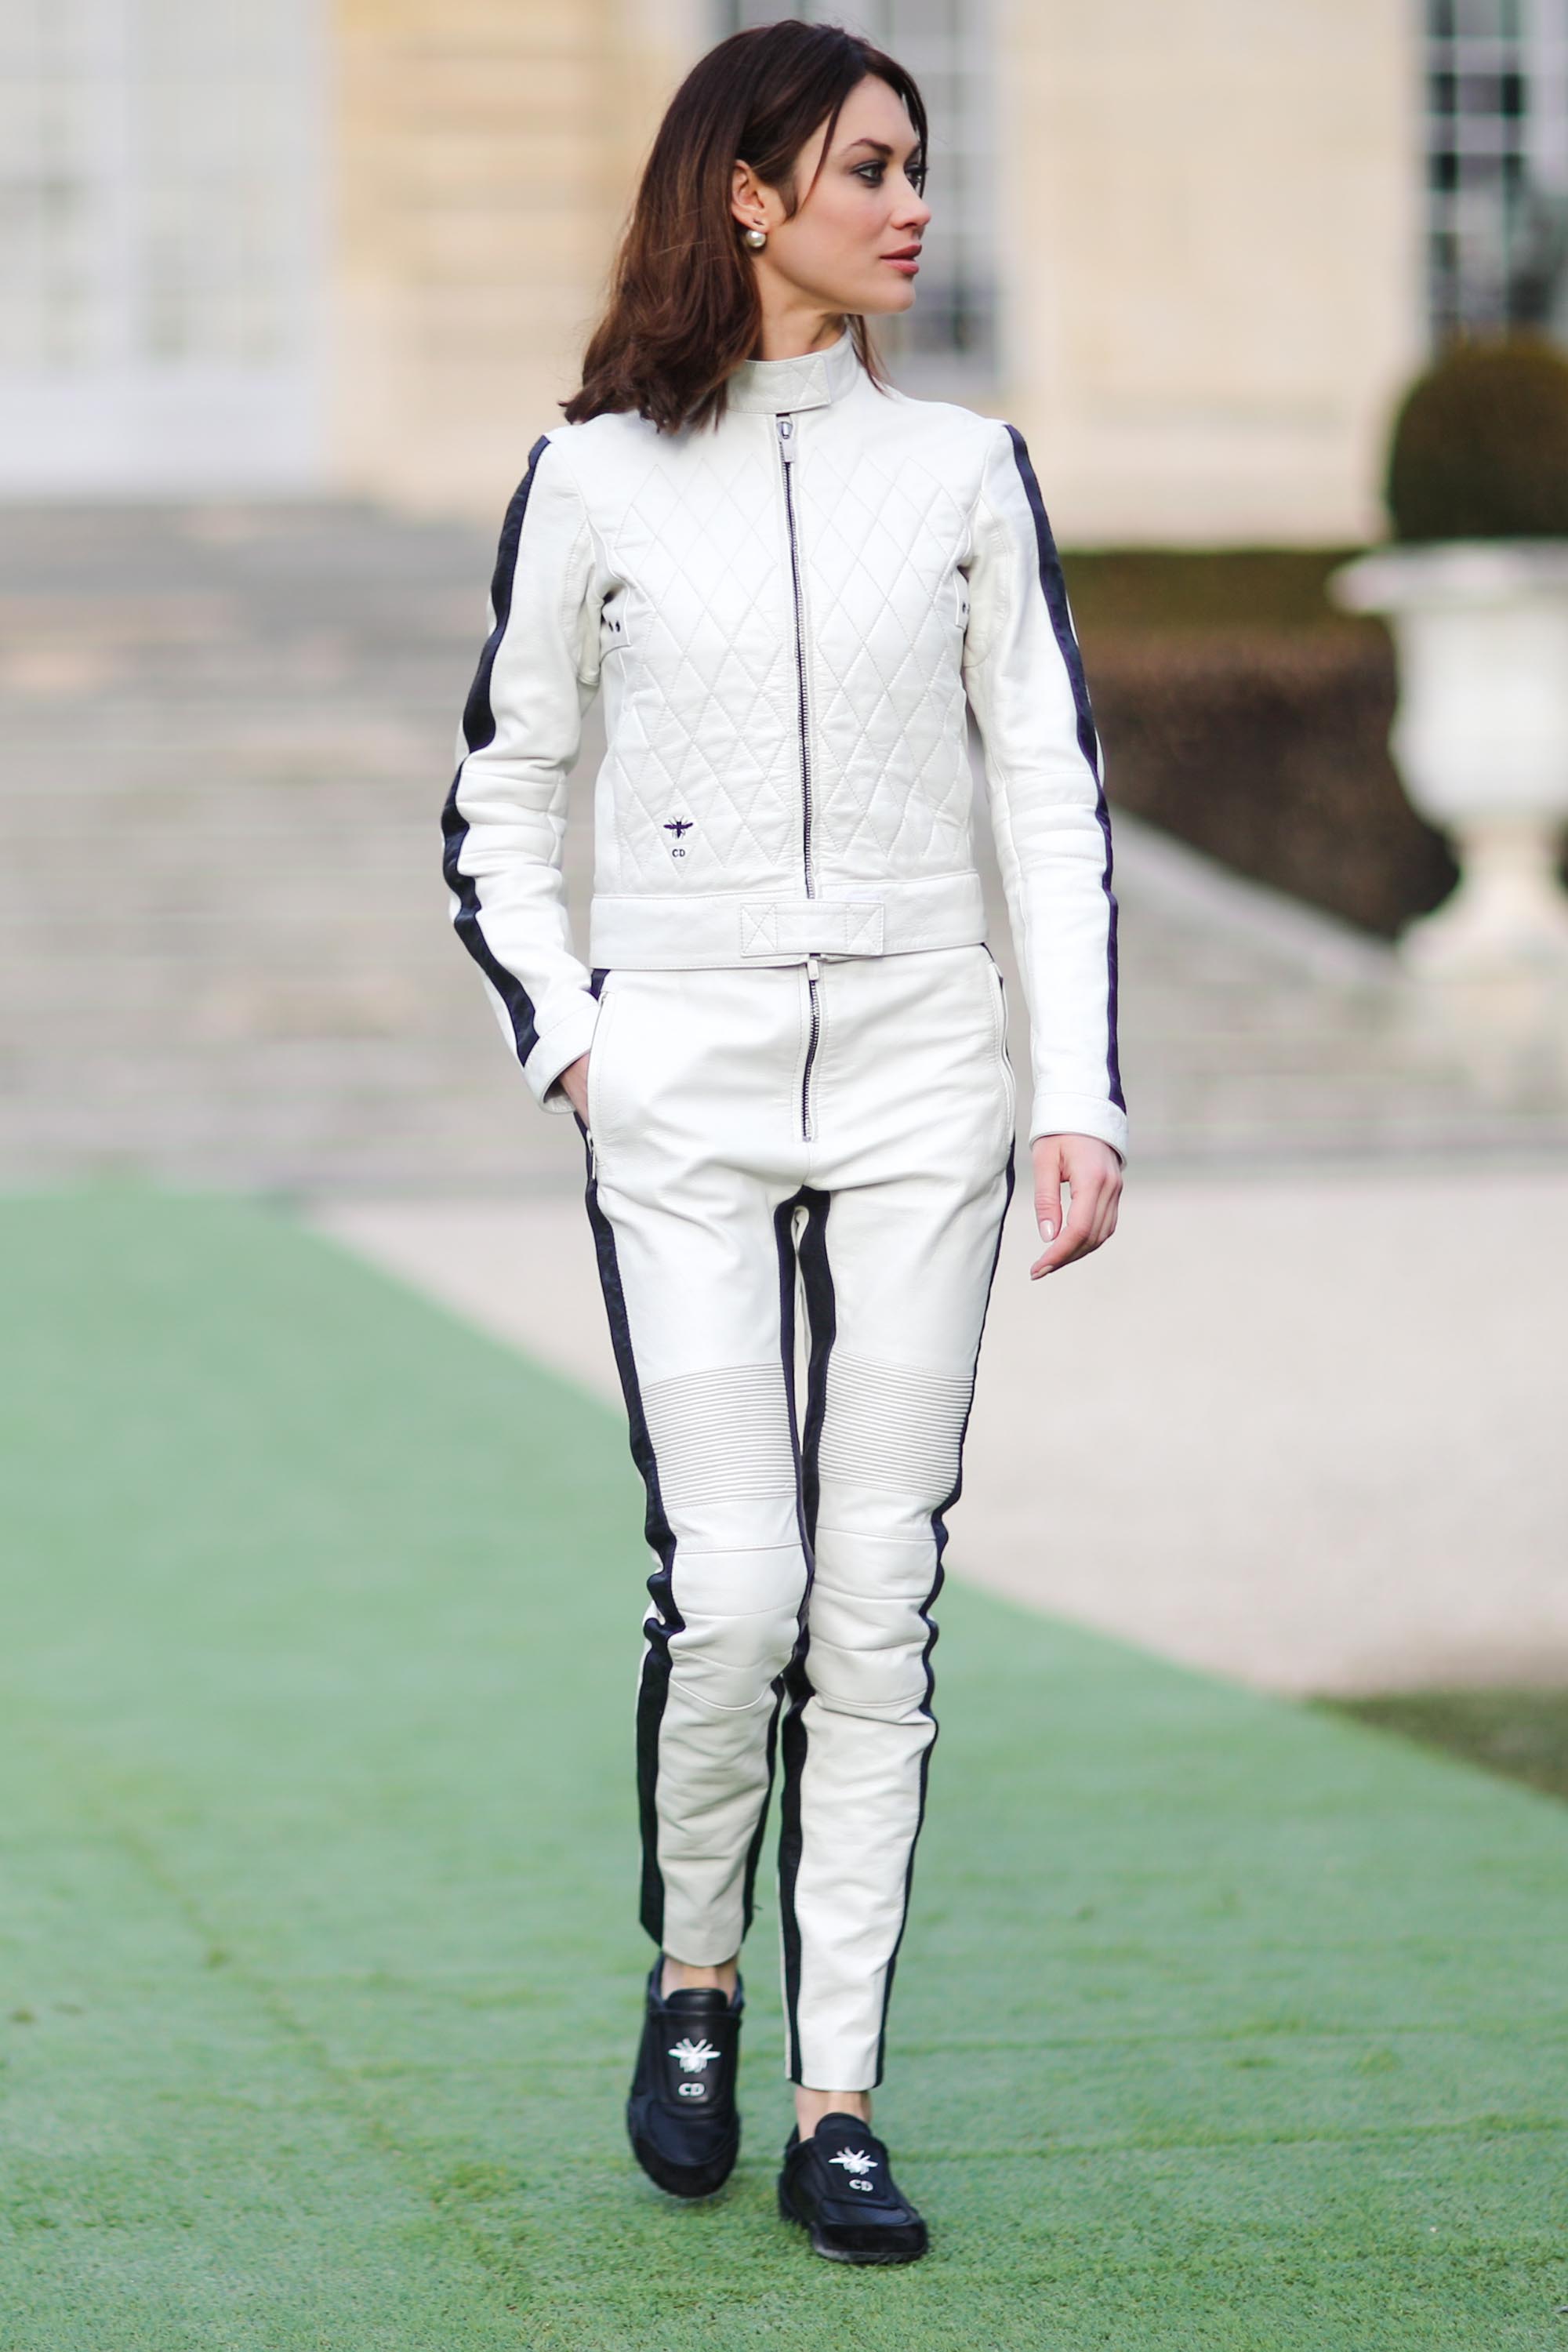 Olga Kurylenko attends the Christian Dior Fashion Show